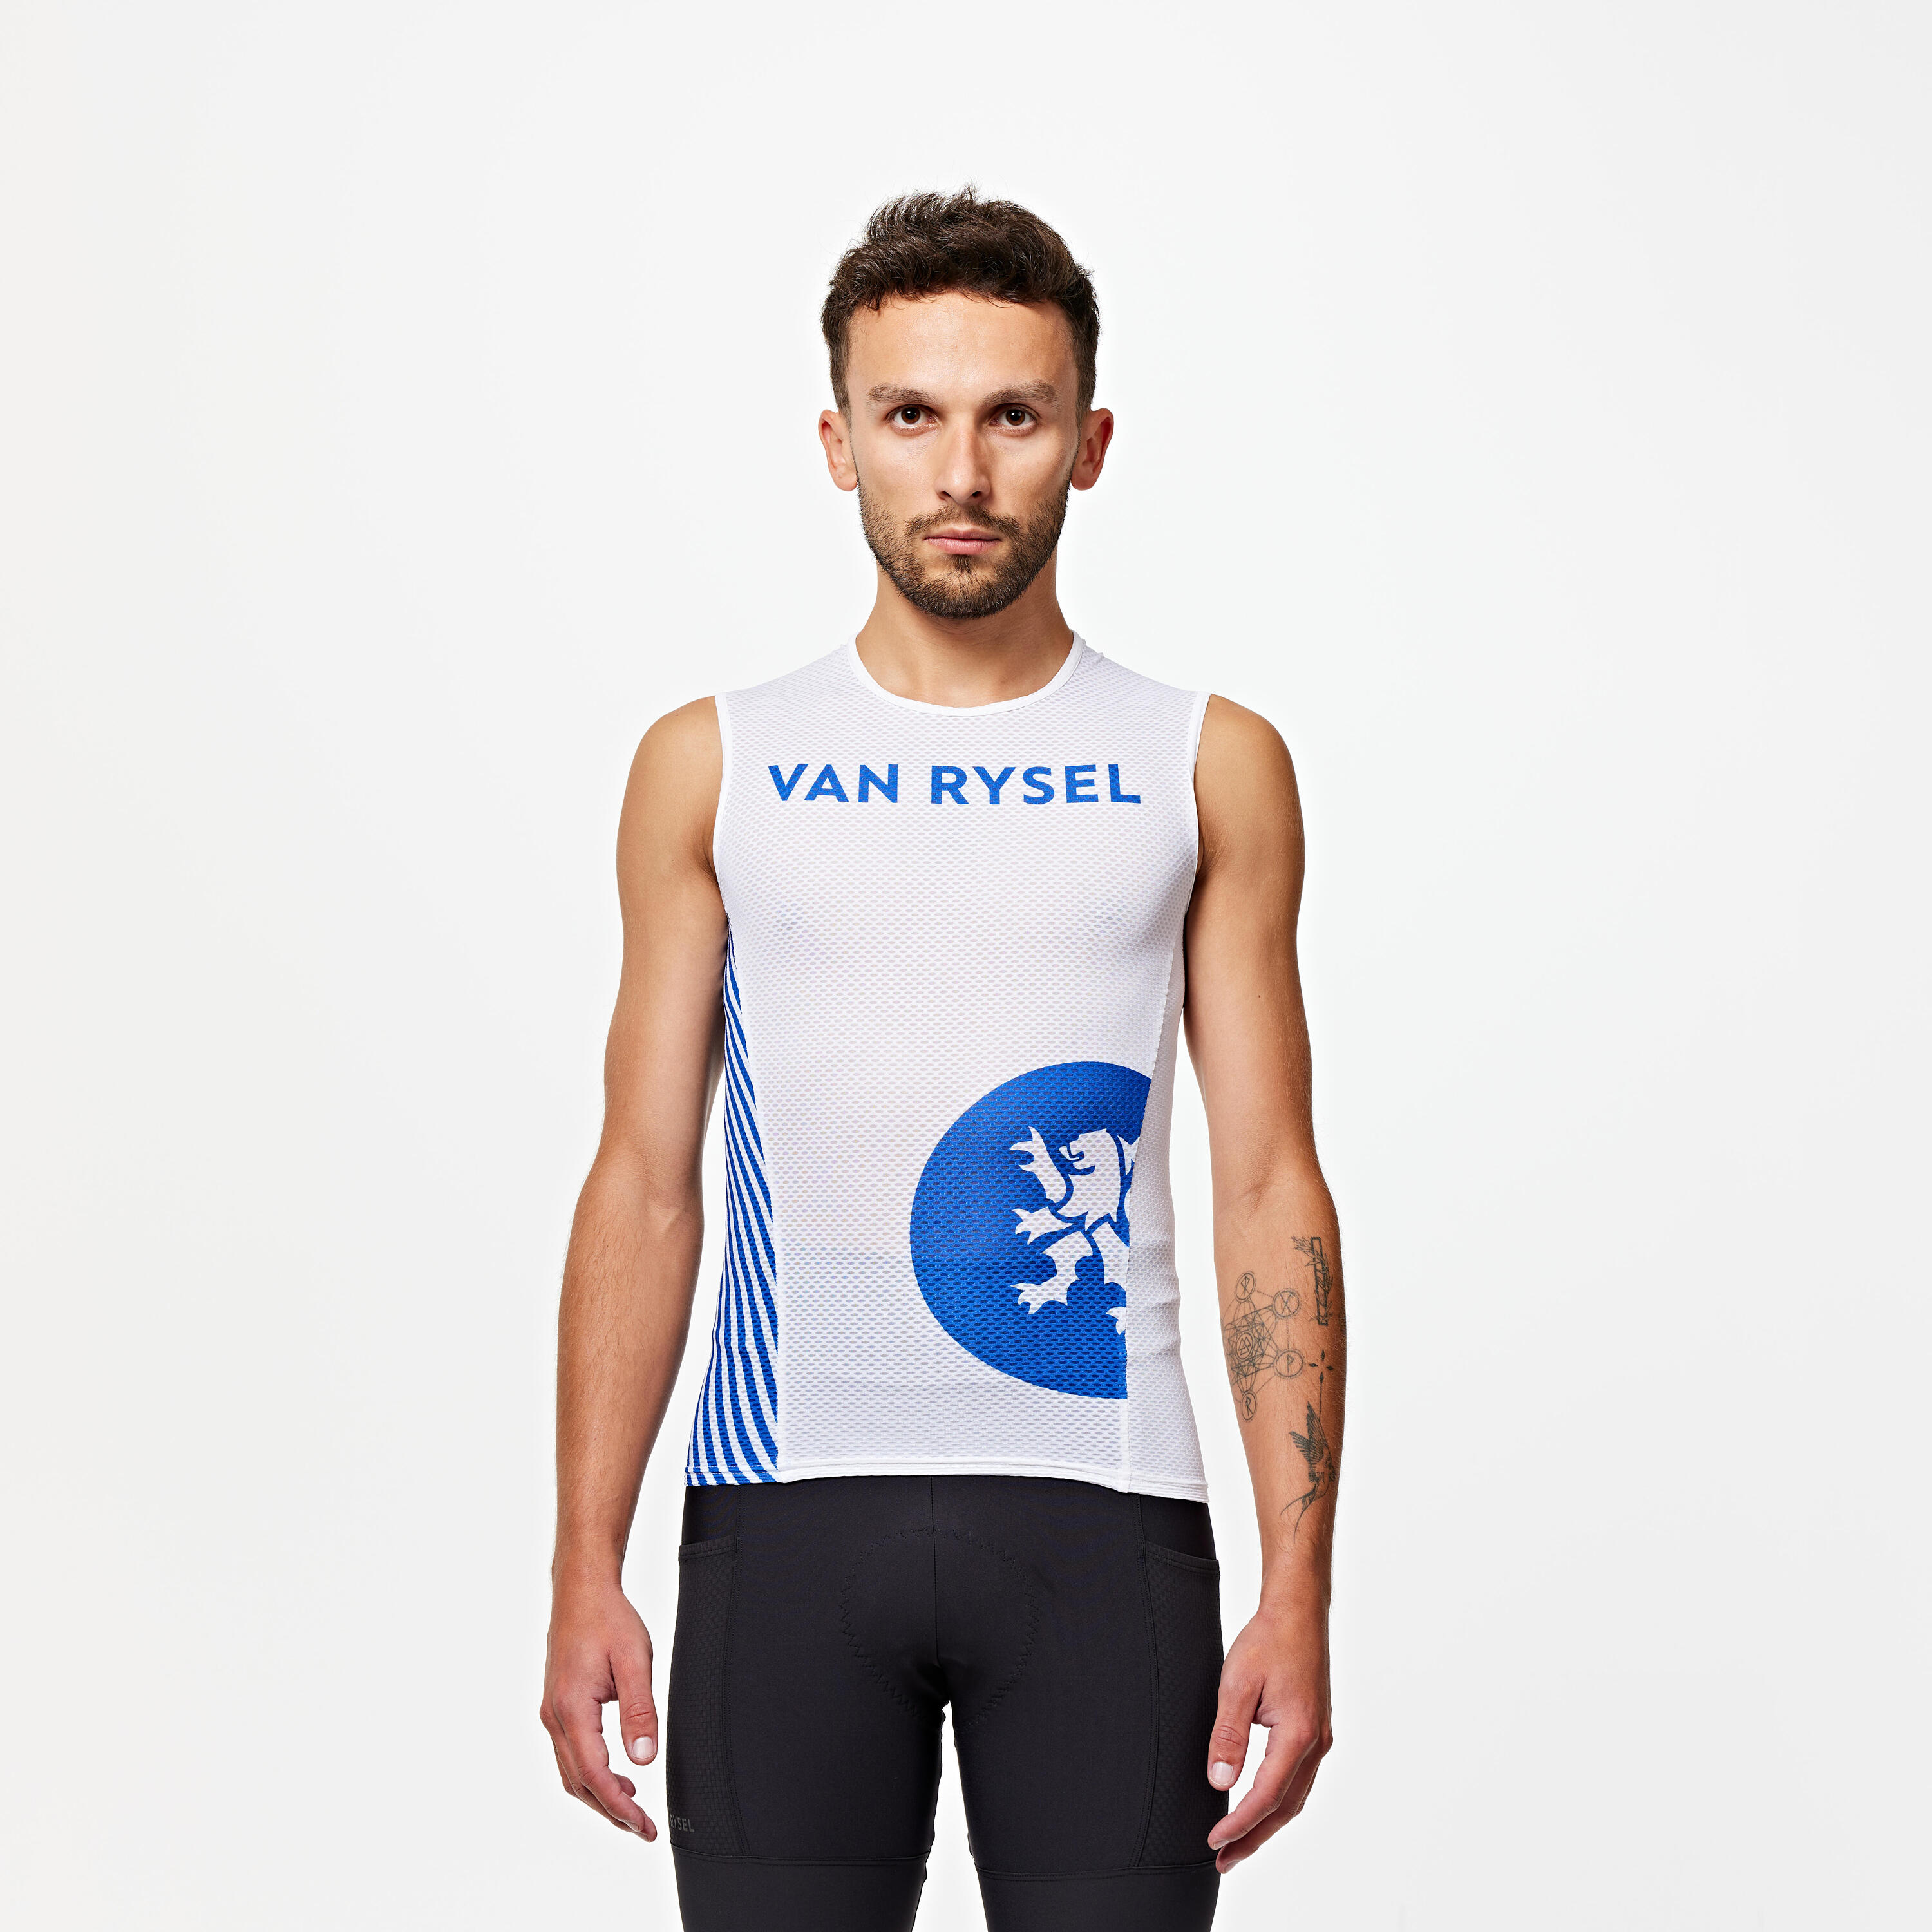 VAN RYSEL Cycling Summer Training Base Layer - White/Blue